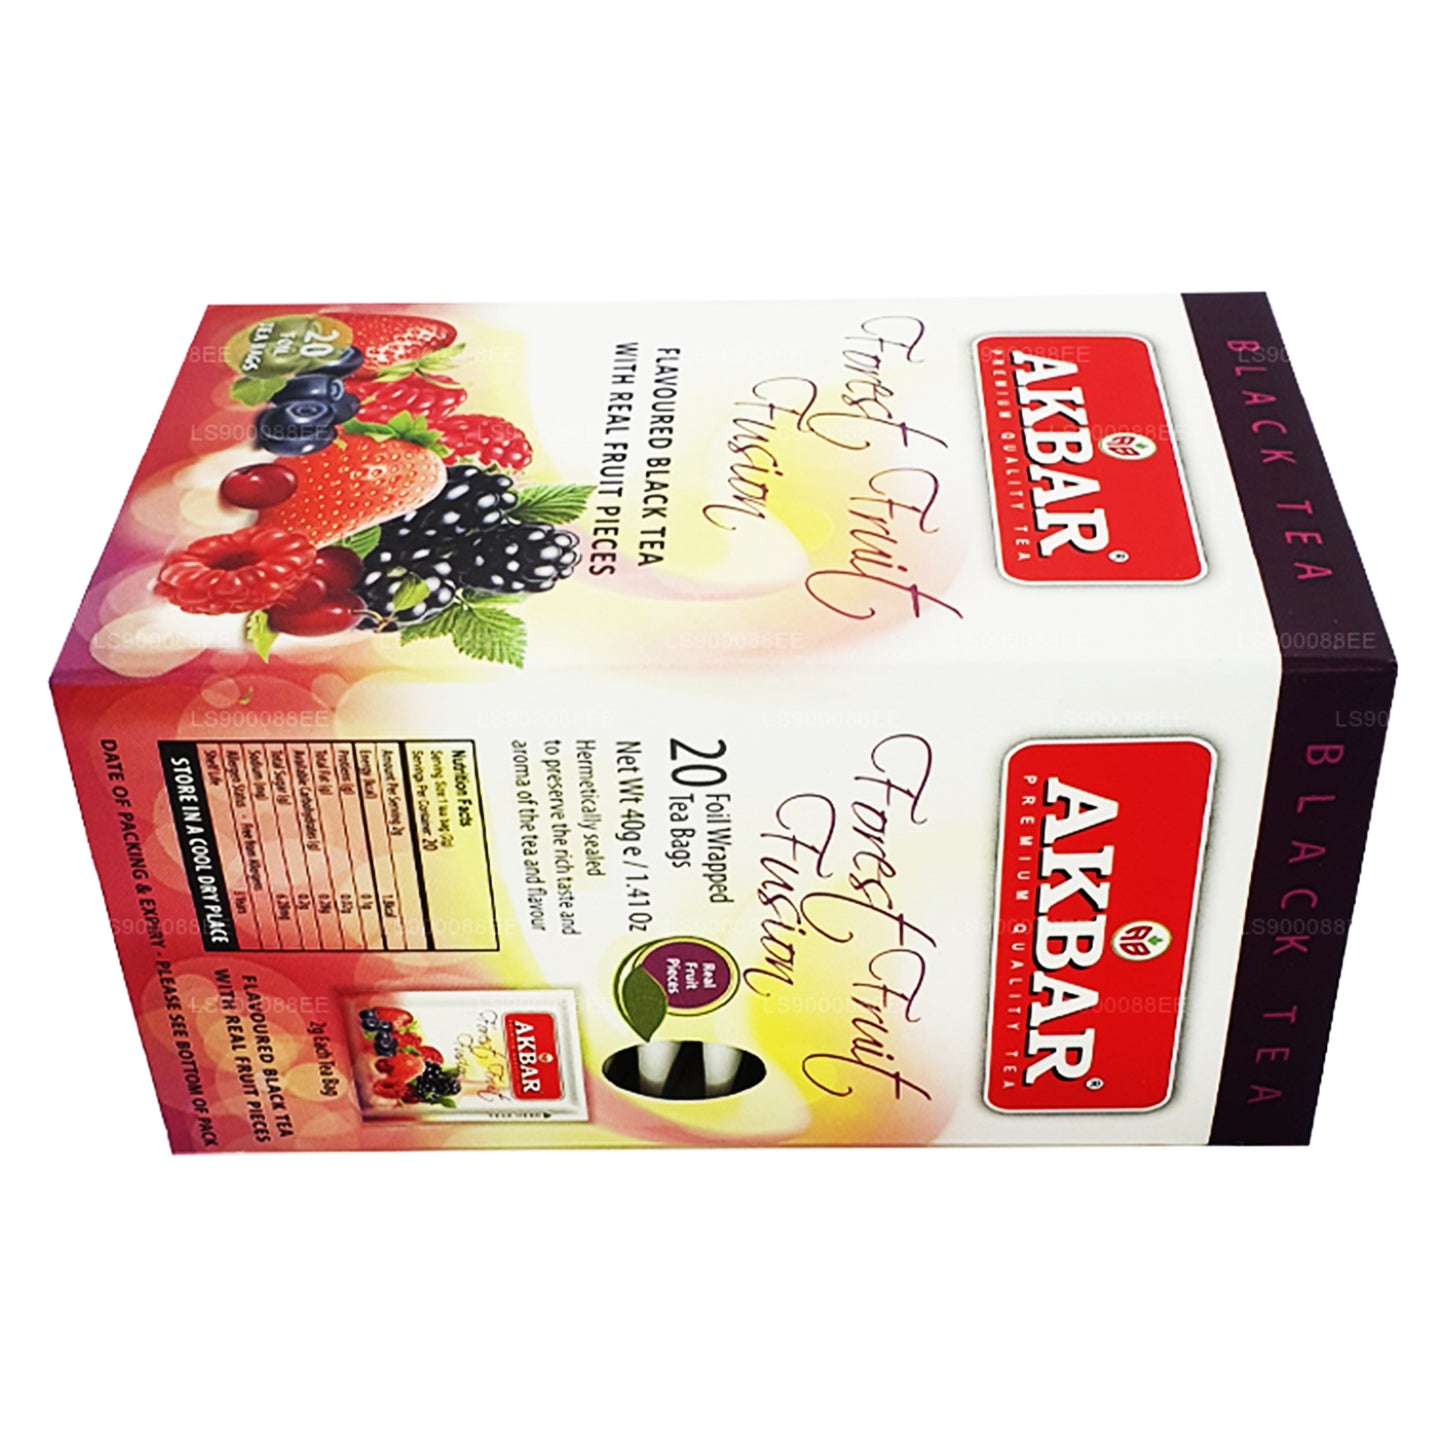 Akbar Forest Fruit Fusion (40g) 20 茶包